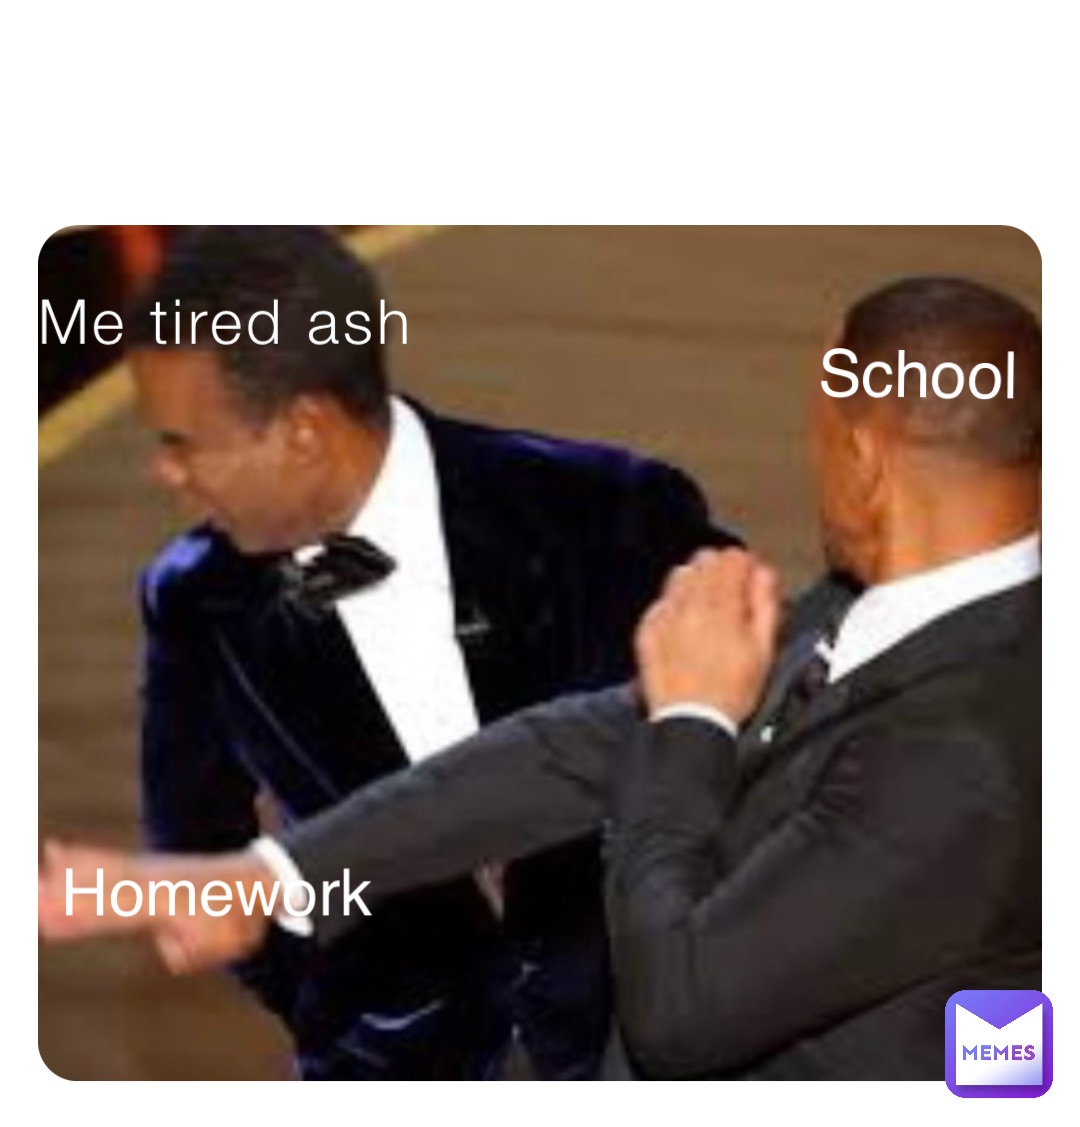 Me tired ash School Homework